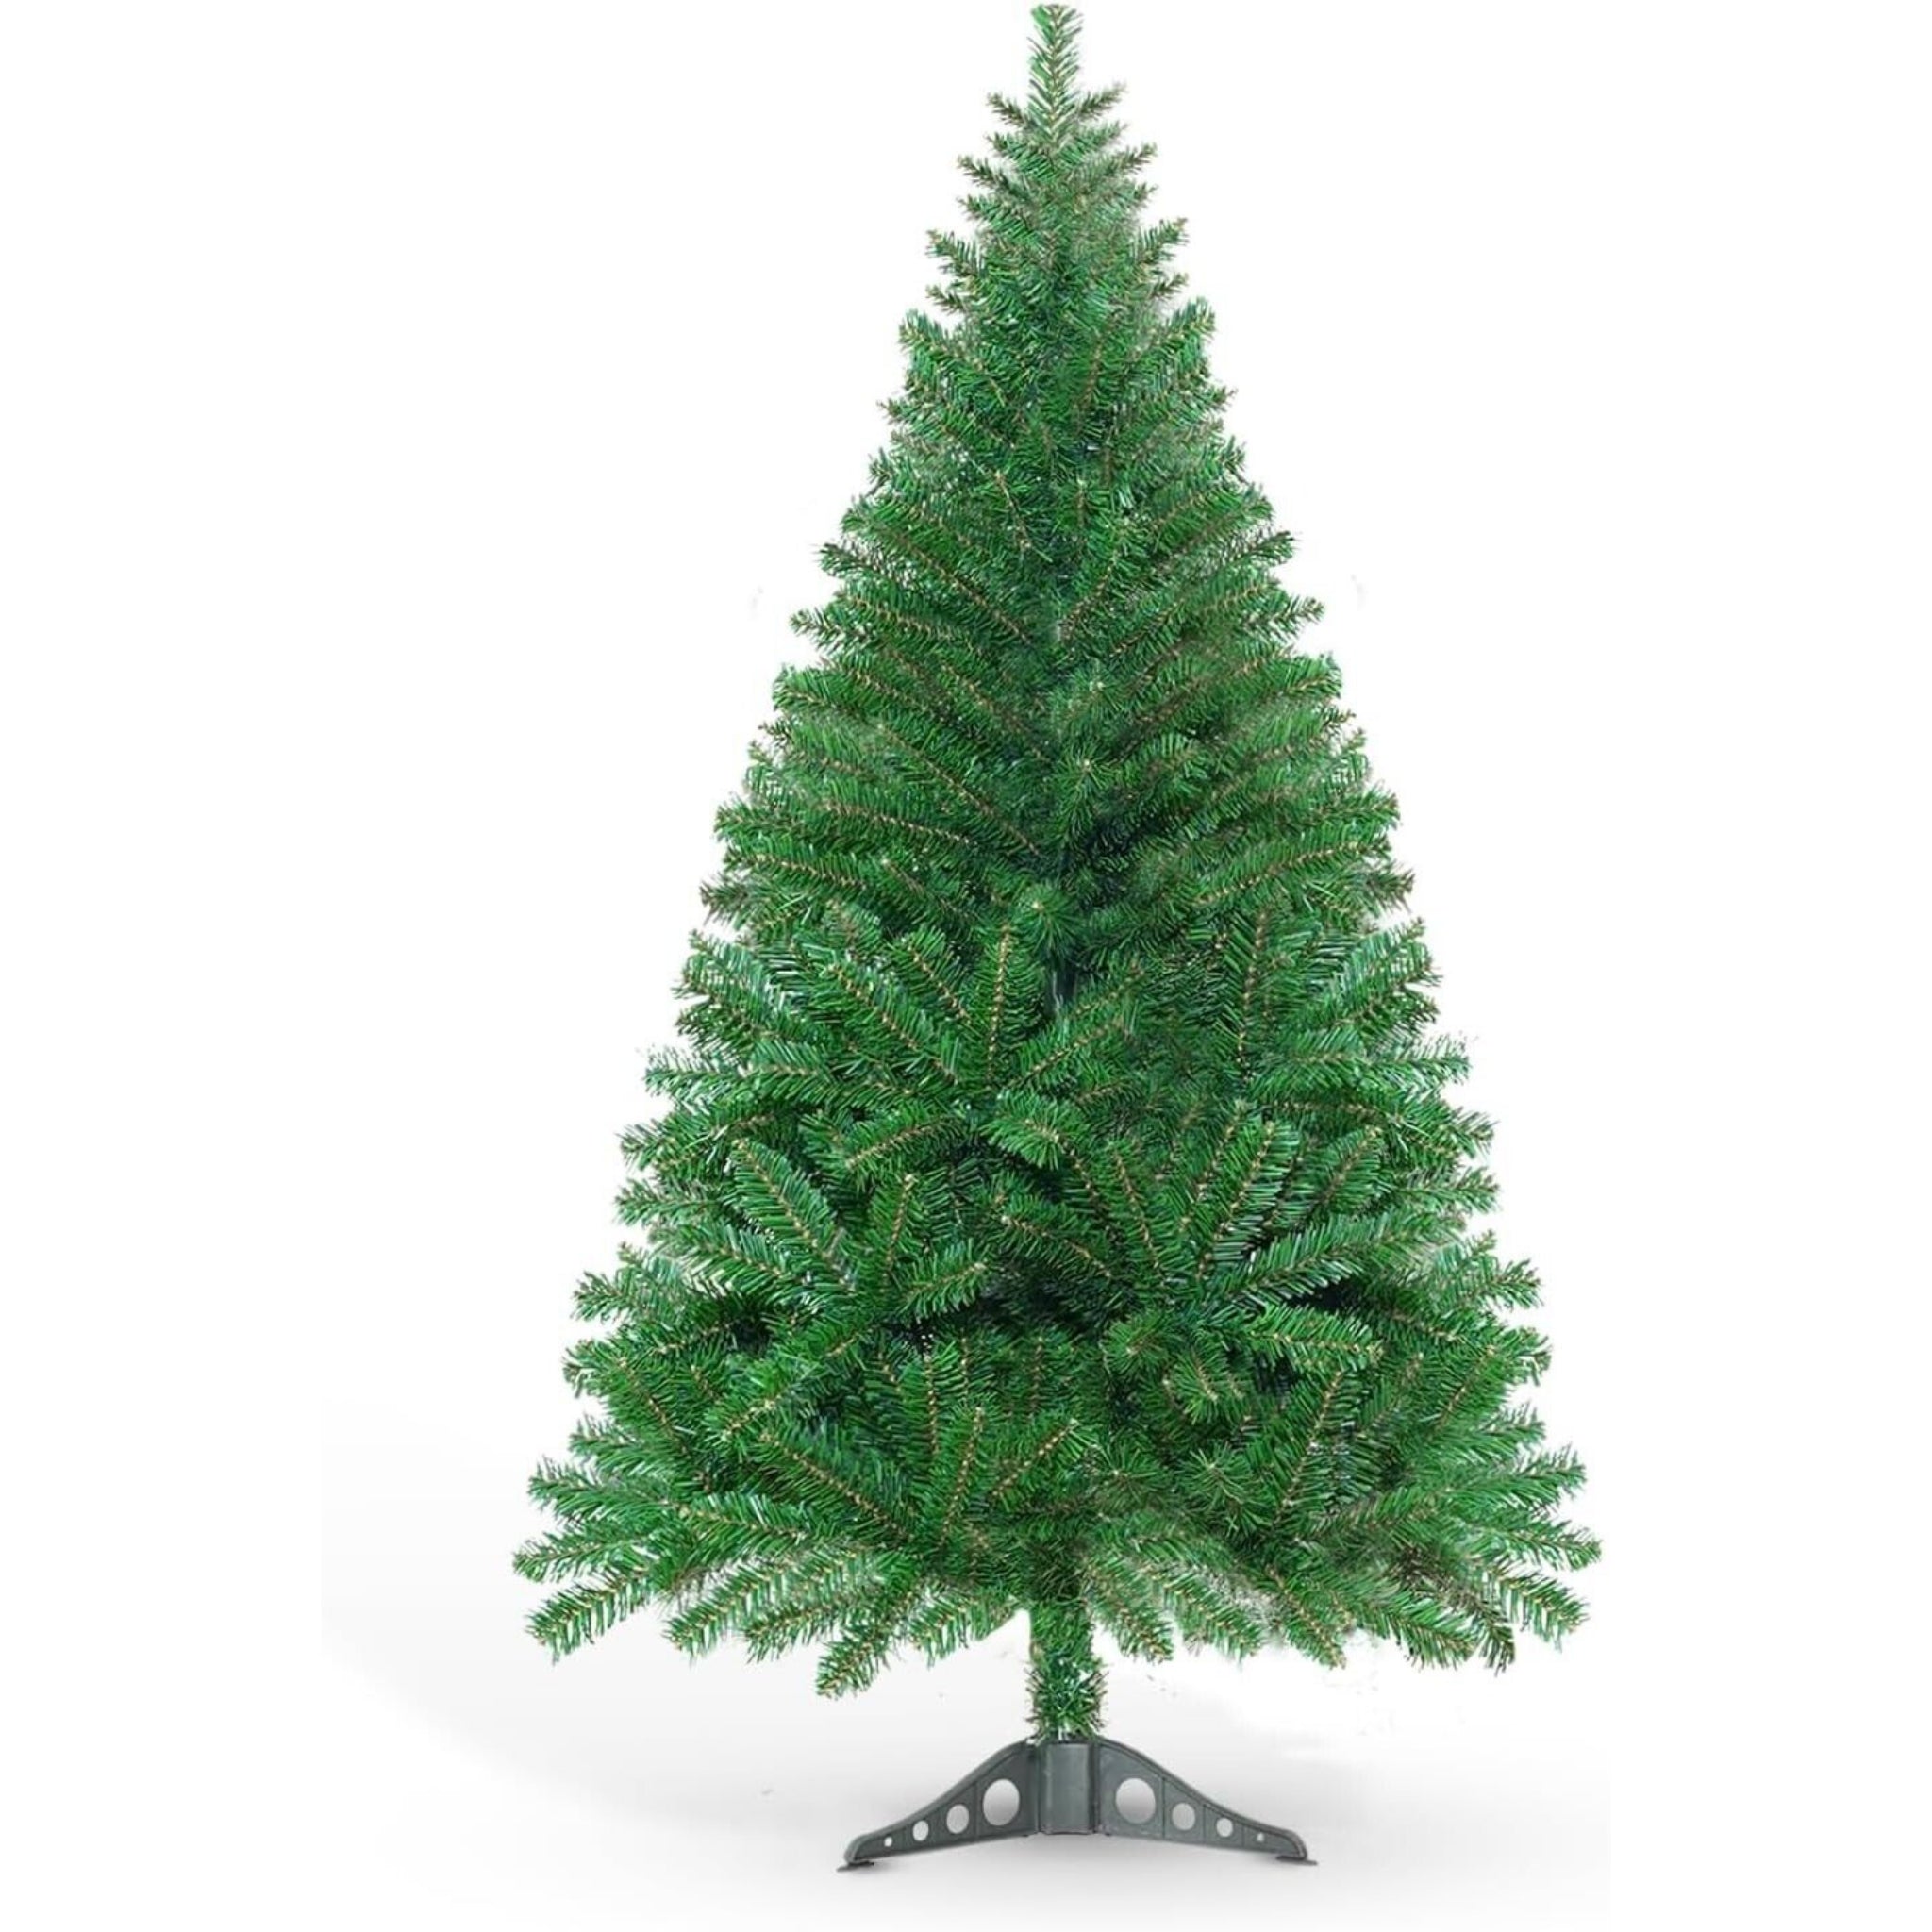 Beclen Harp 6FT Christmas/Xmas Artificial Fiber Optics Bushy Pine Green Decoration Tree-Perfect Christmas/Xmas Decor